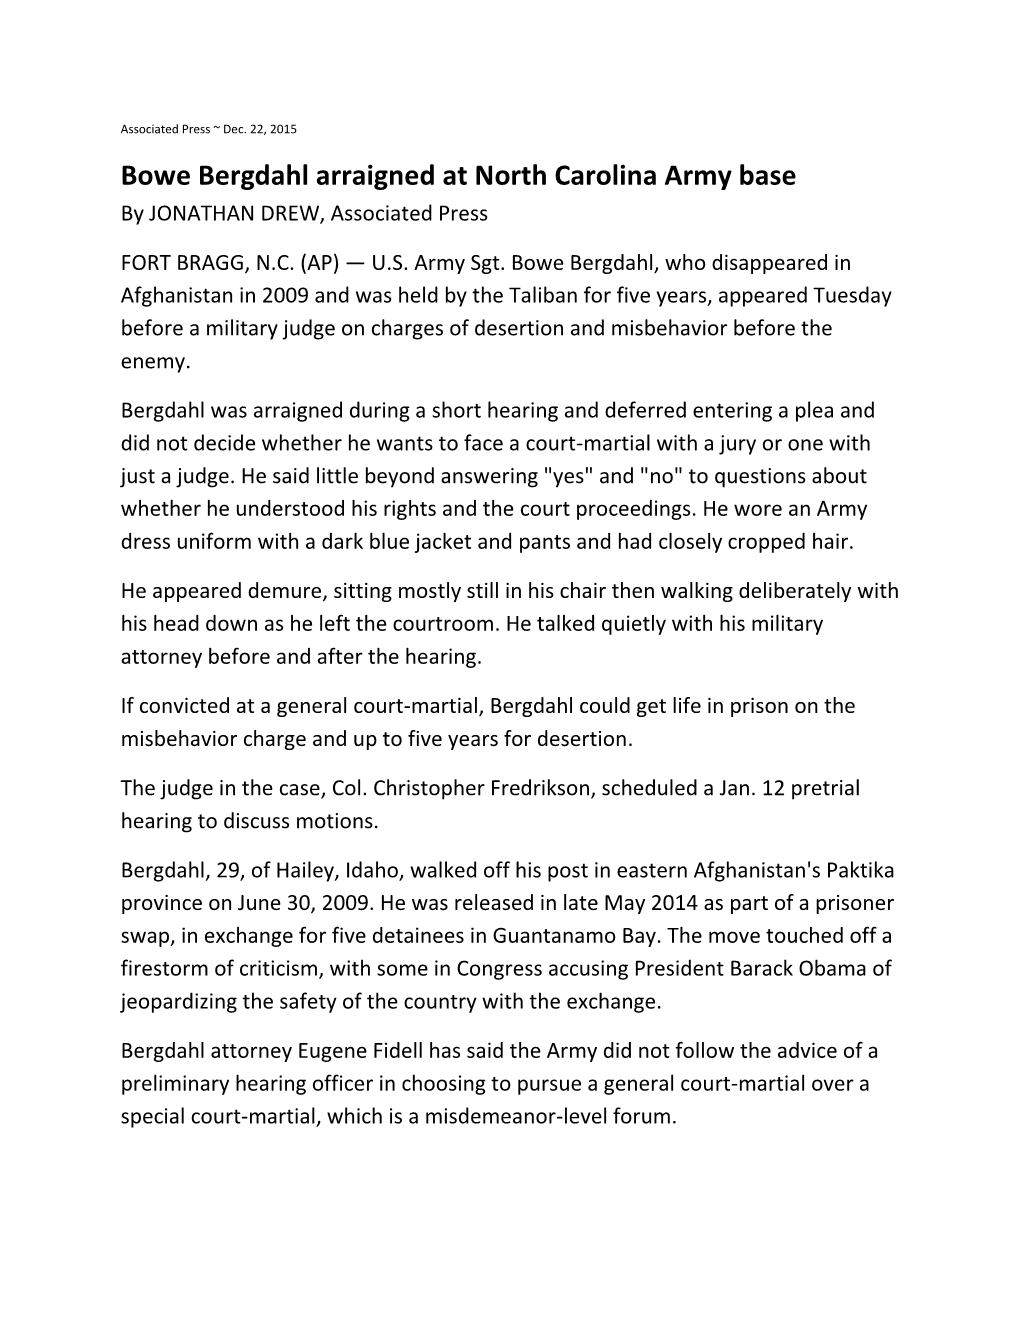 Bowe Bergdahl Arraigned at North Carolina Army Base by JONATHAN DREW, Associated Press